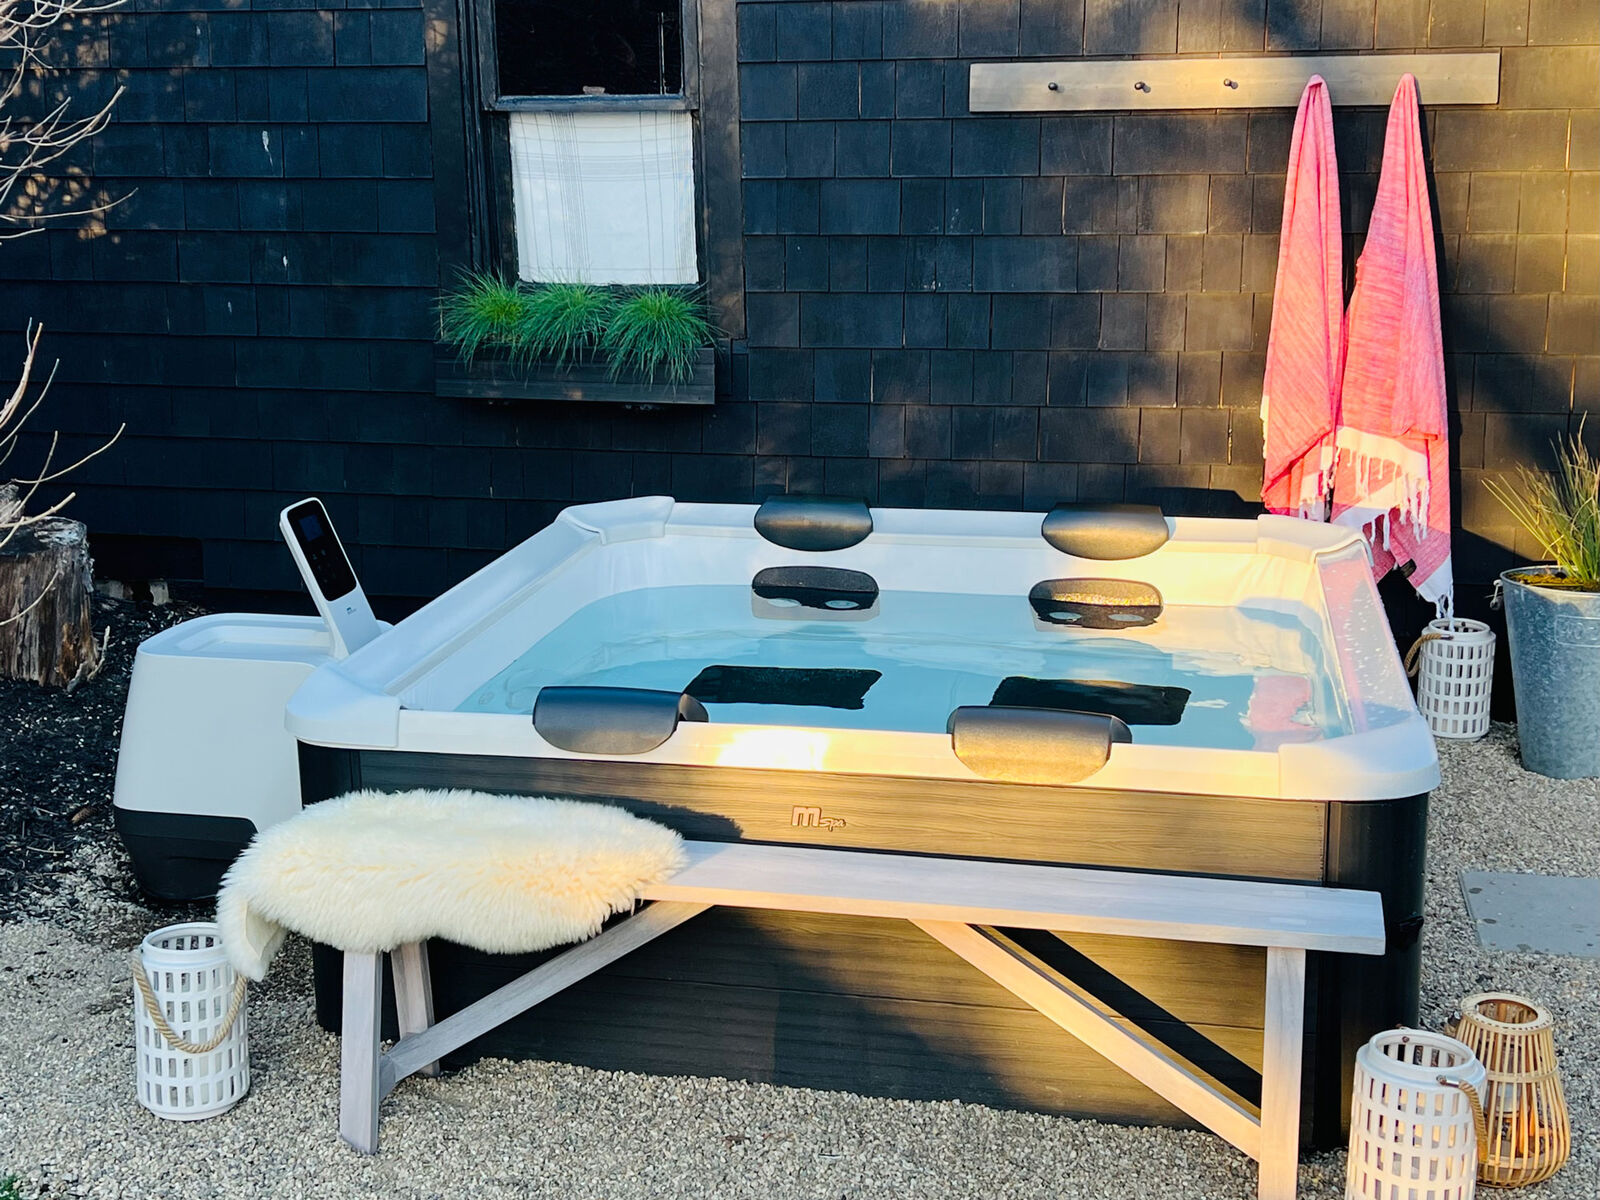 MSpa Oslo 4-6 Person Portable Hot Tub - Beyond outdoor living